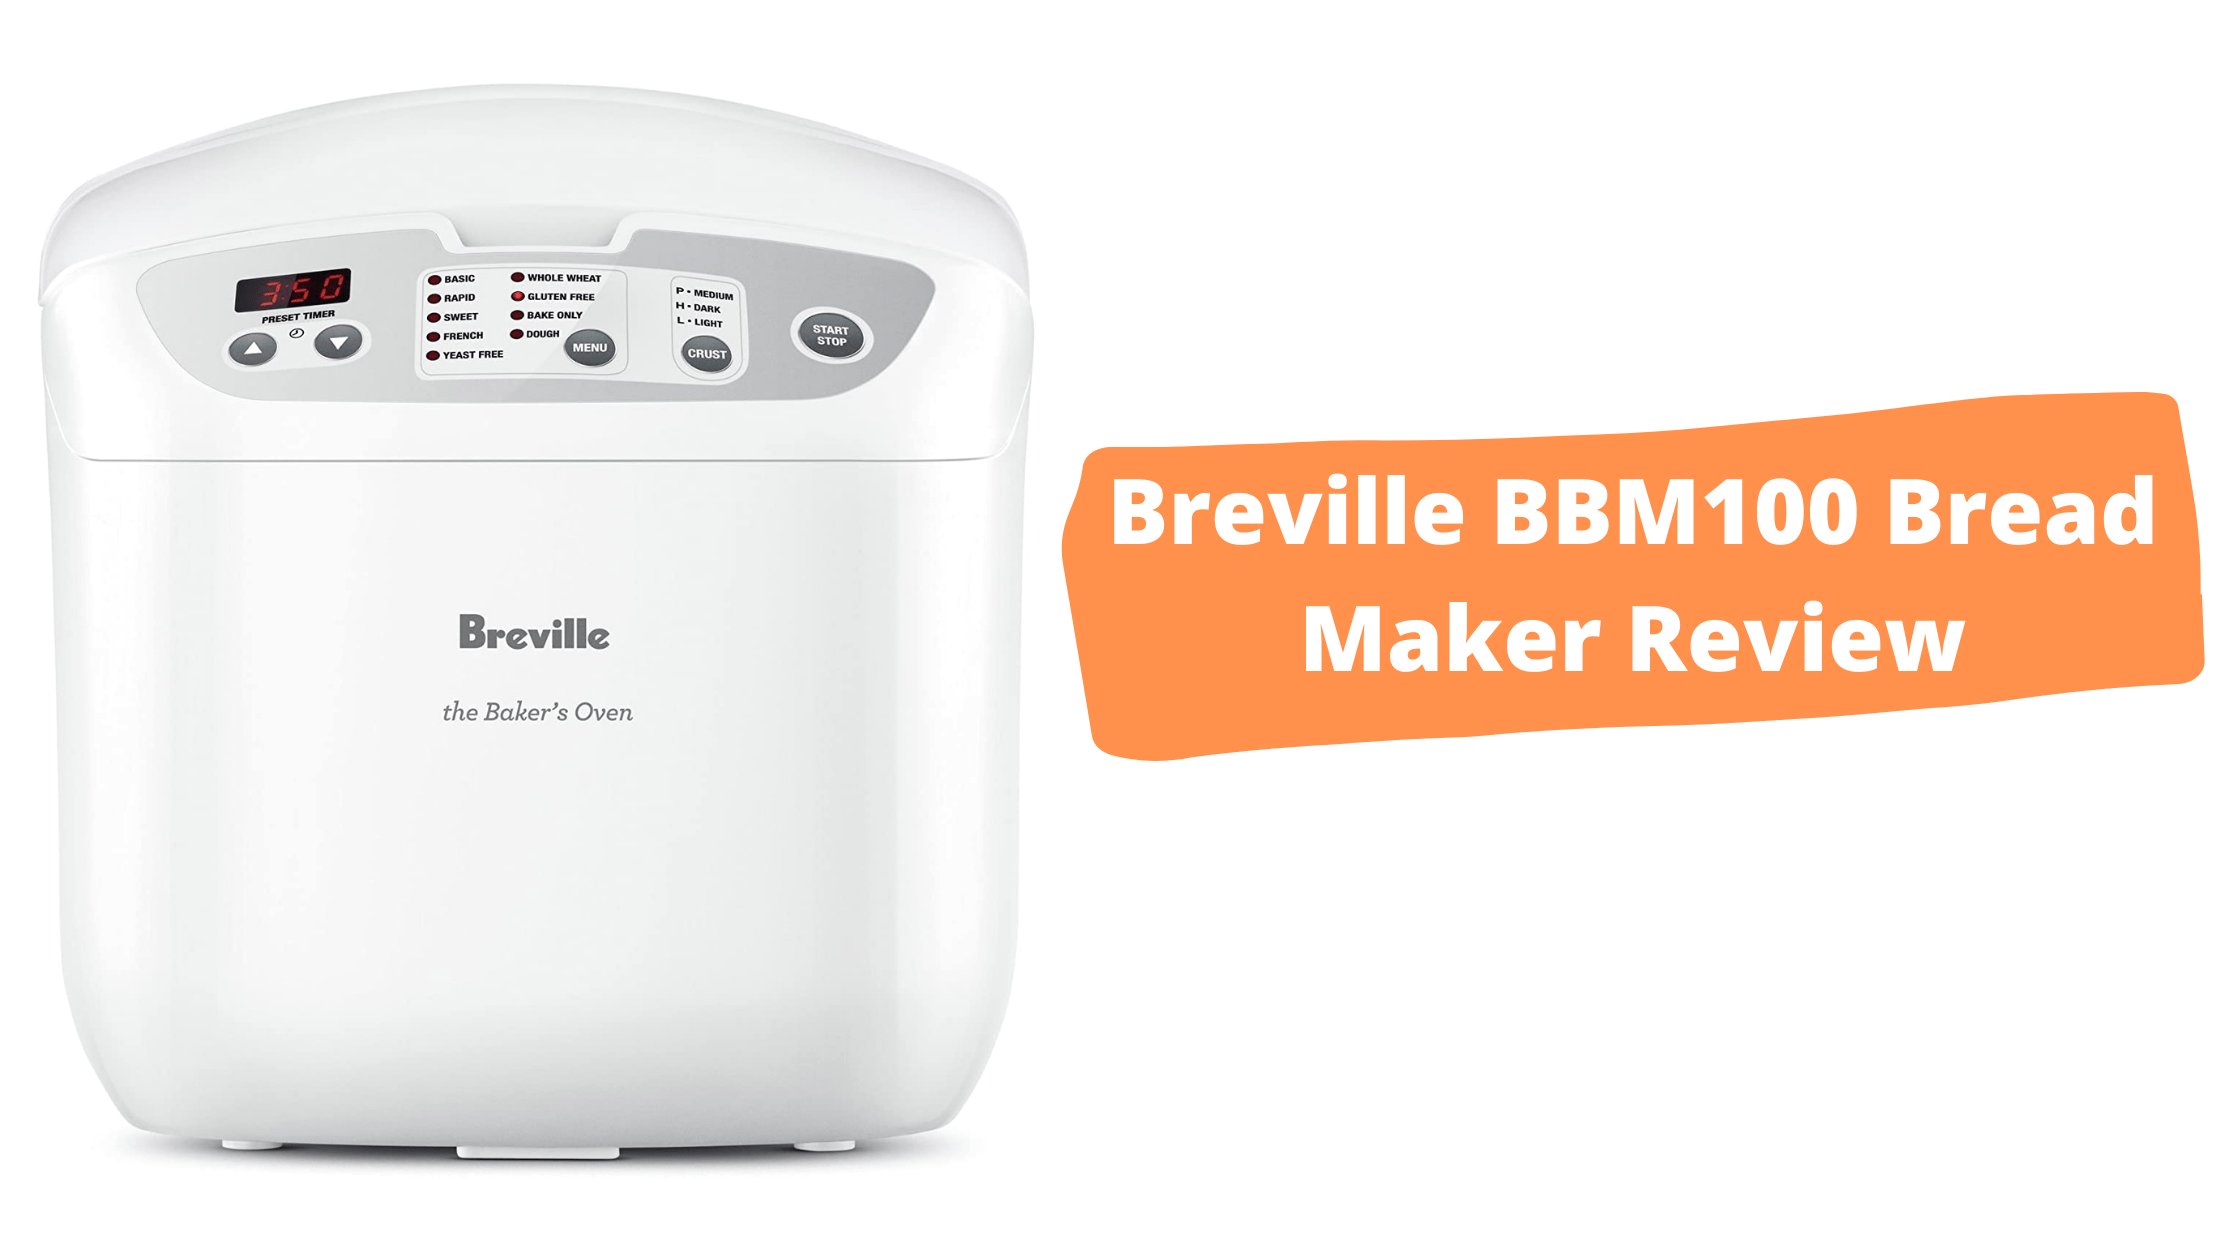 Breville BBM100 Bread Maker Review